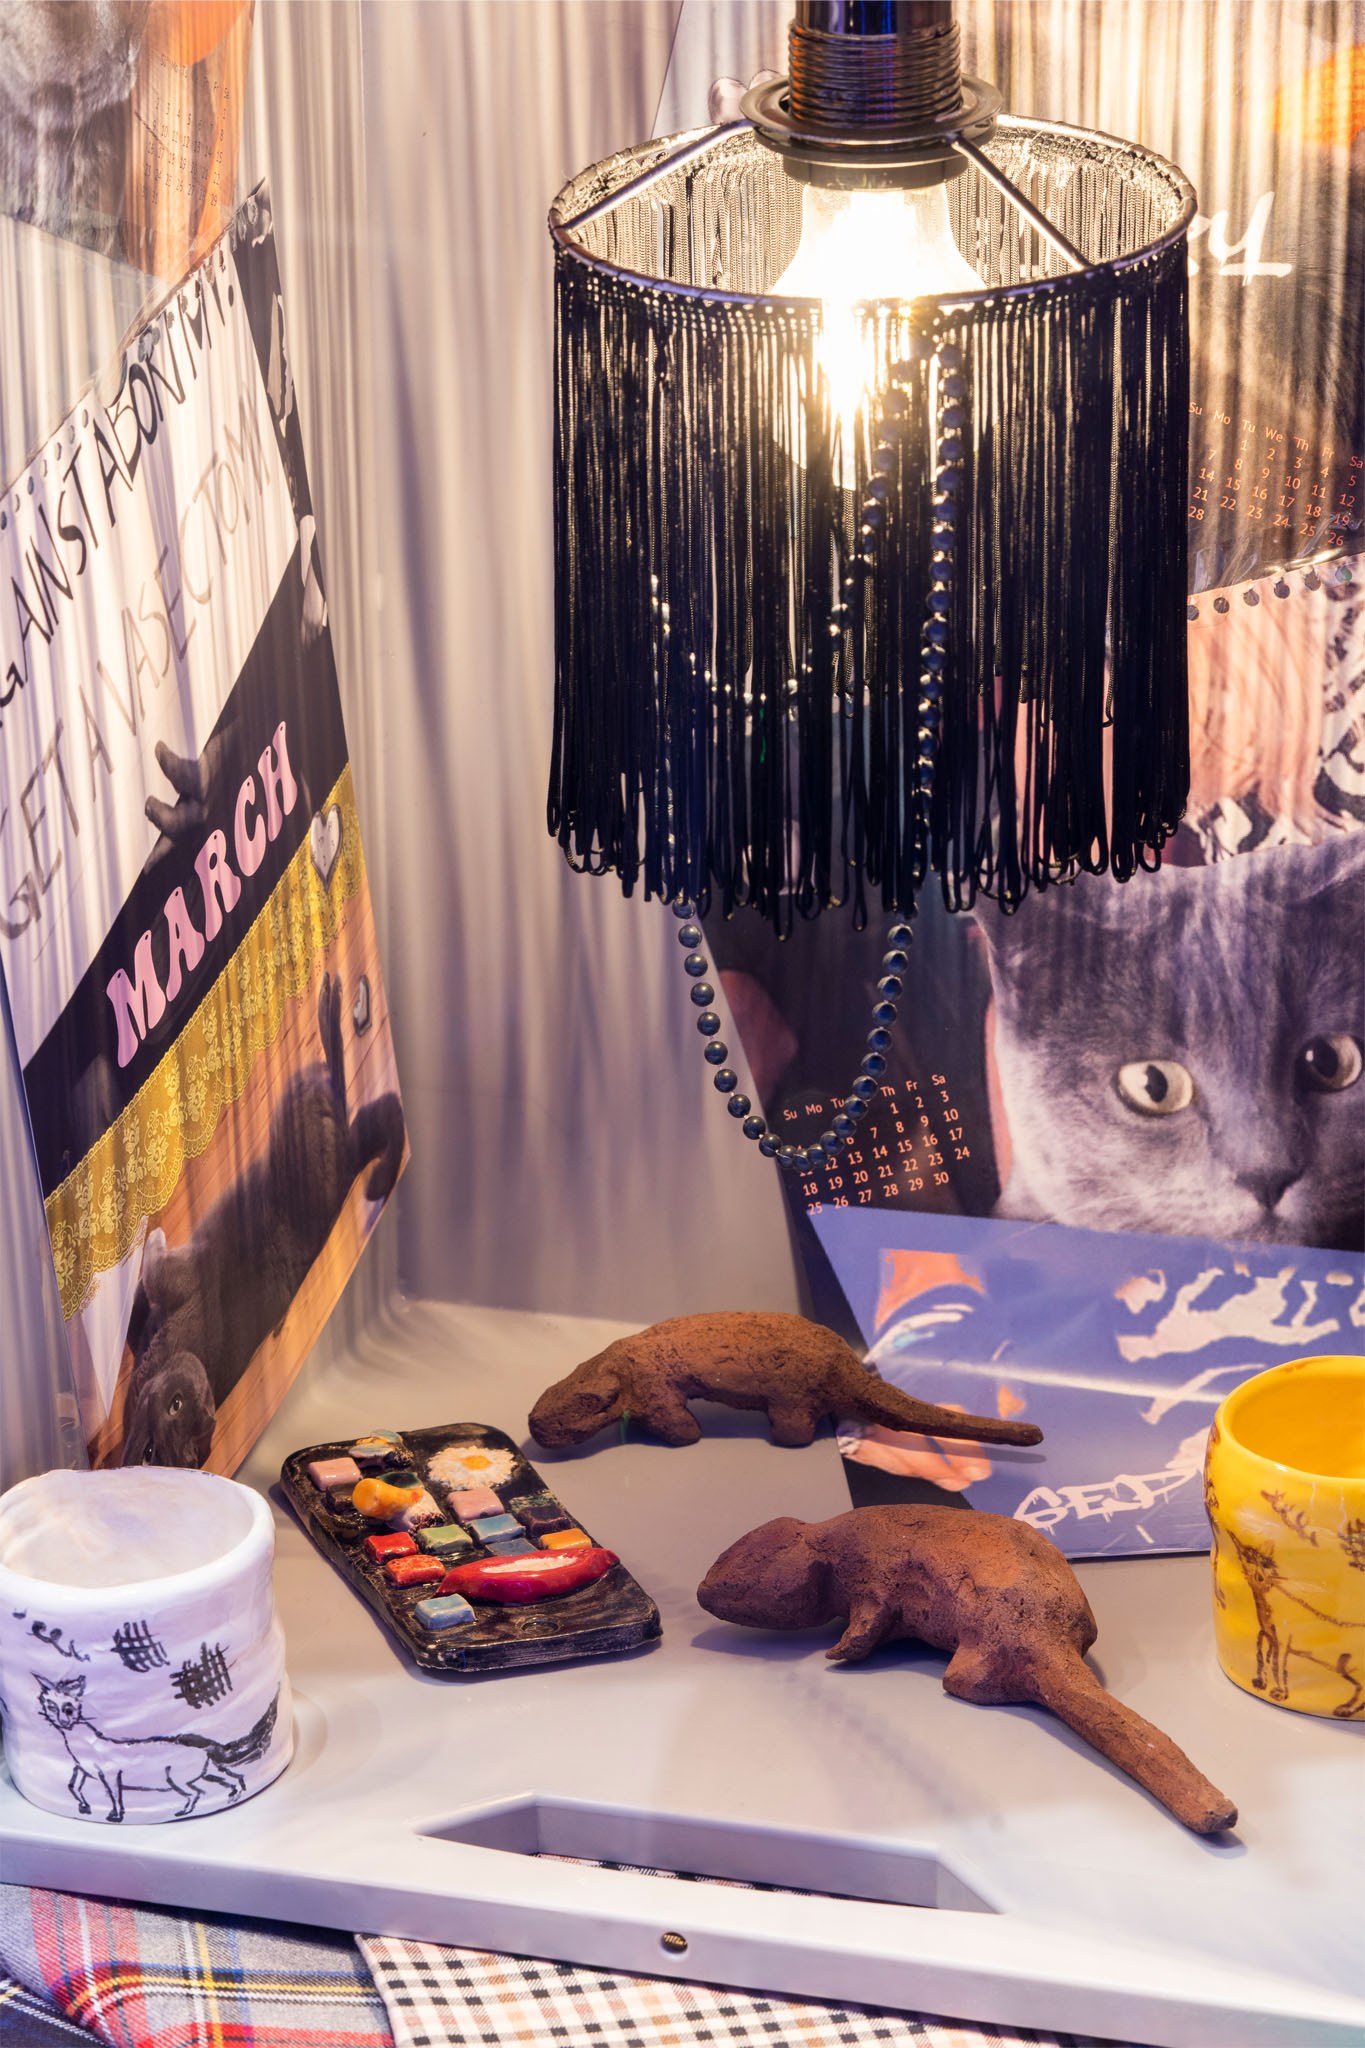 Black Palm â€“ Sonja Cvitkovic, Daily Deals, New Toni, Berlin, 2022, Installation view, cups by Isabelle Fein (glazed ceramic), lamp by Sonja Cvitkovic (textil), rats by Michaela Meise (ceramic), iPhone by Hanna Schwarz (glazed ceramic)